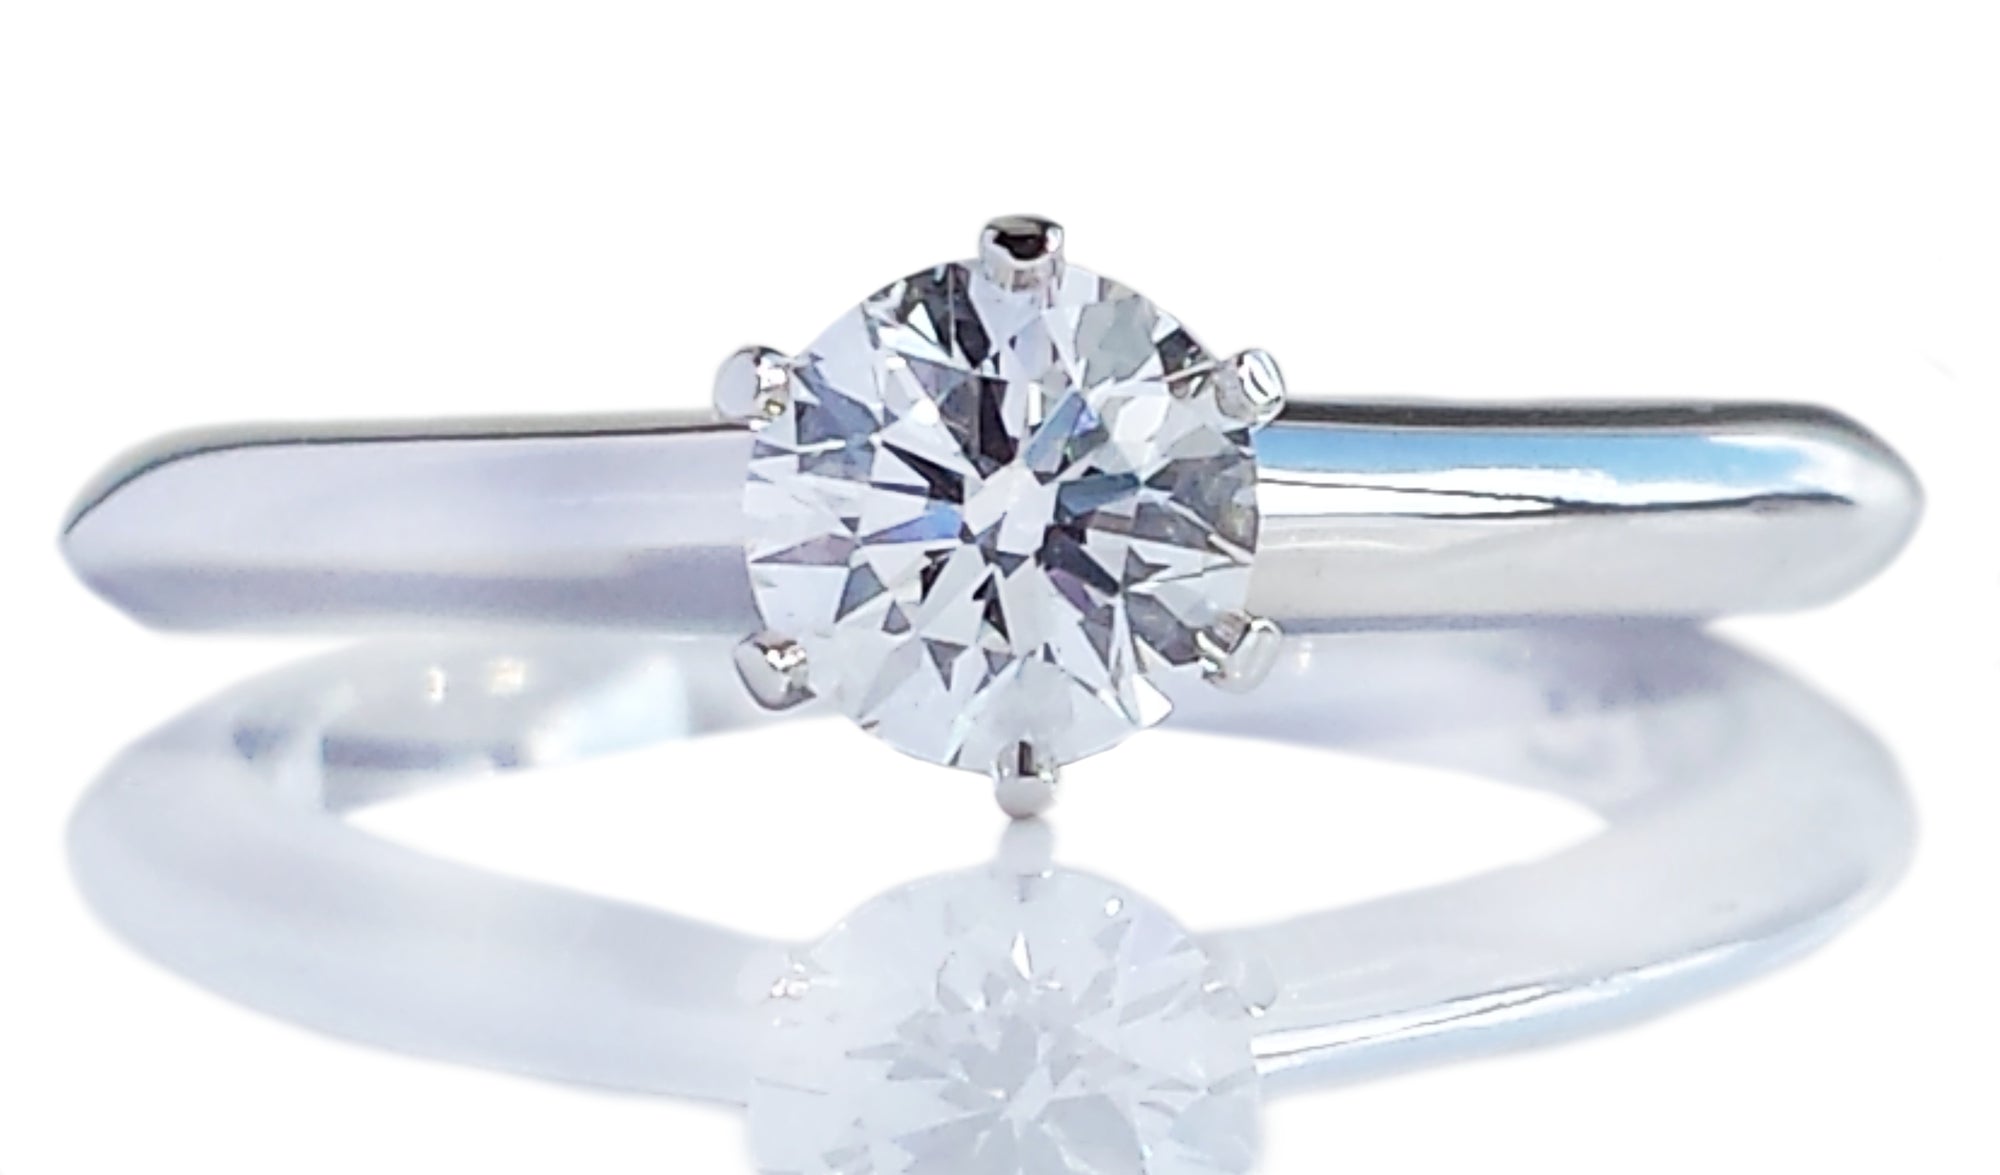 Tiffany & Co. 0.31ct G/VS Round Brilliant Cut Diamond Engagement Ring